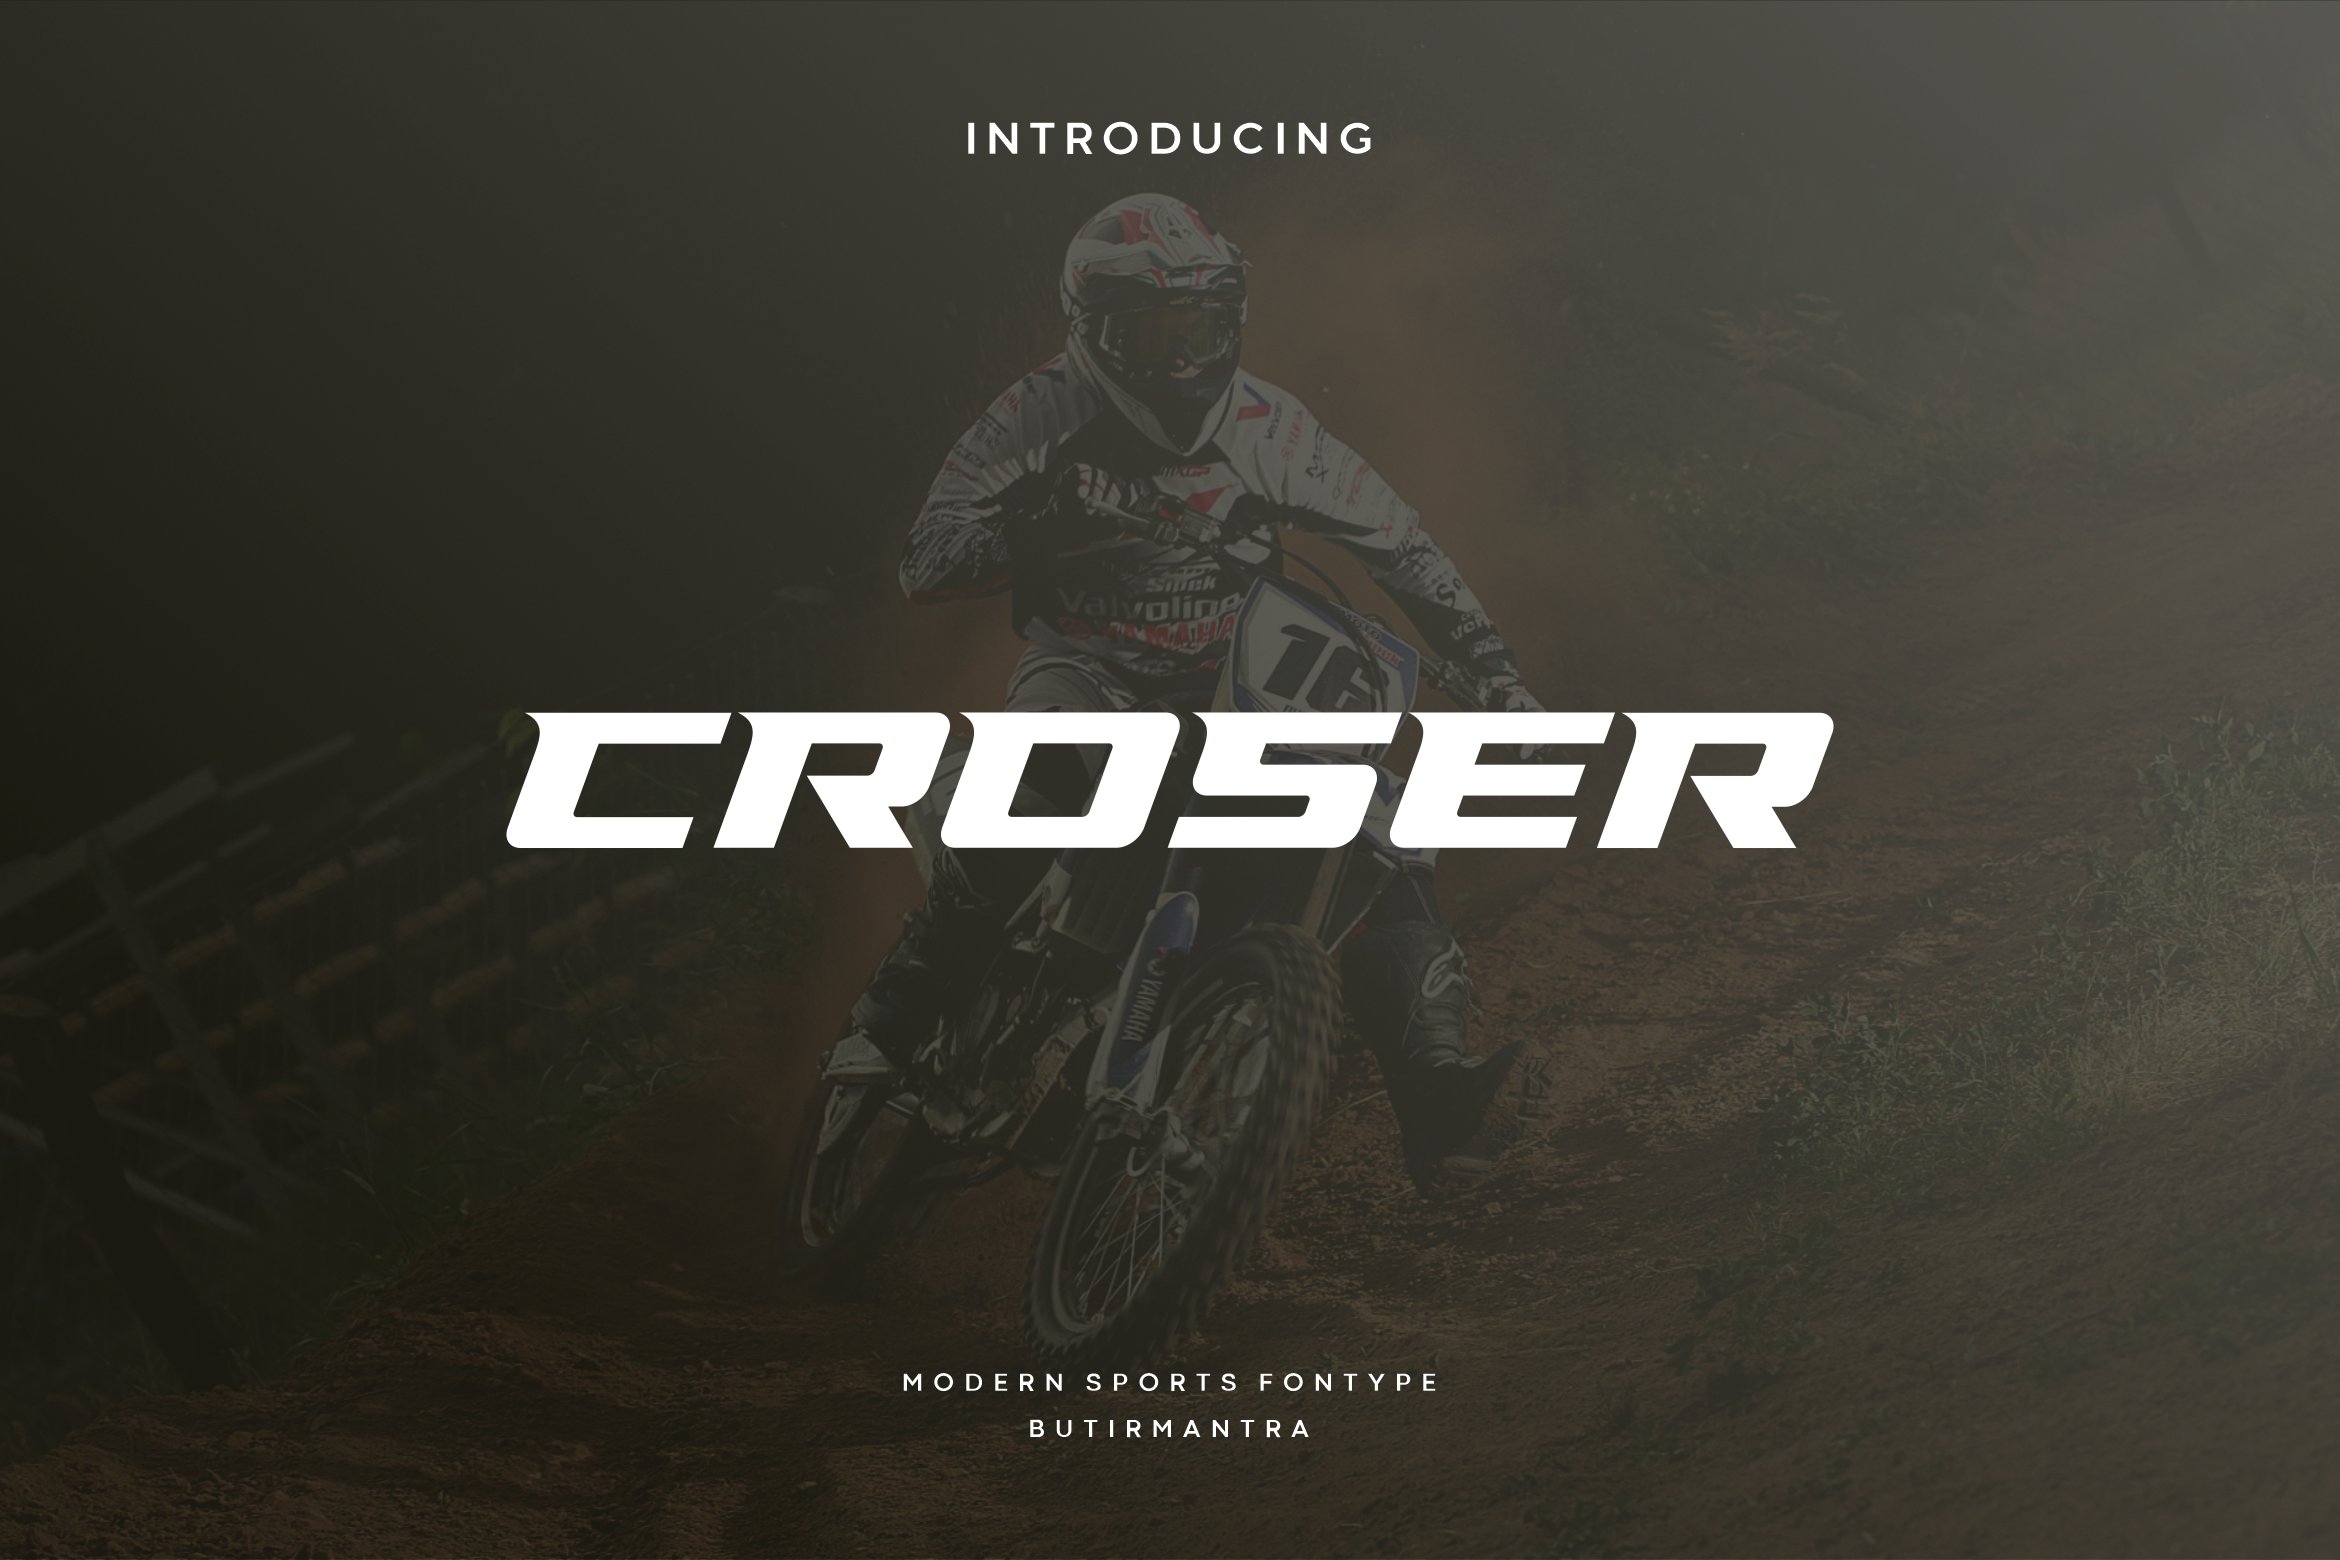 Croser cover image.